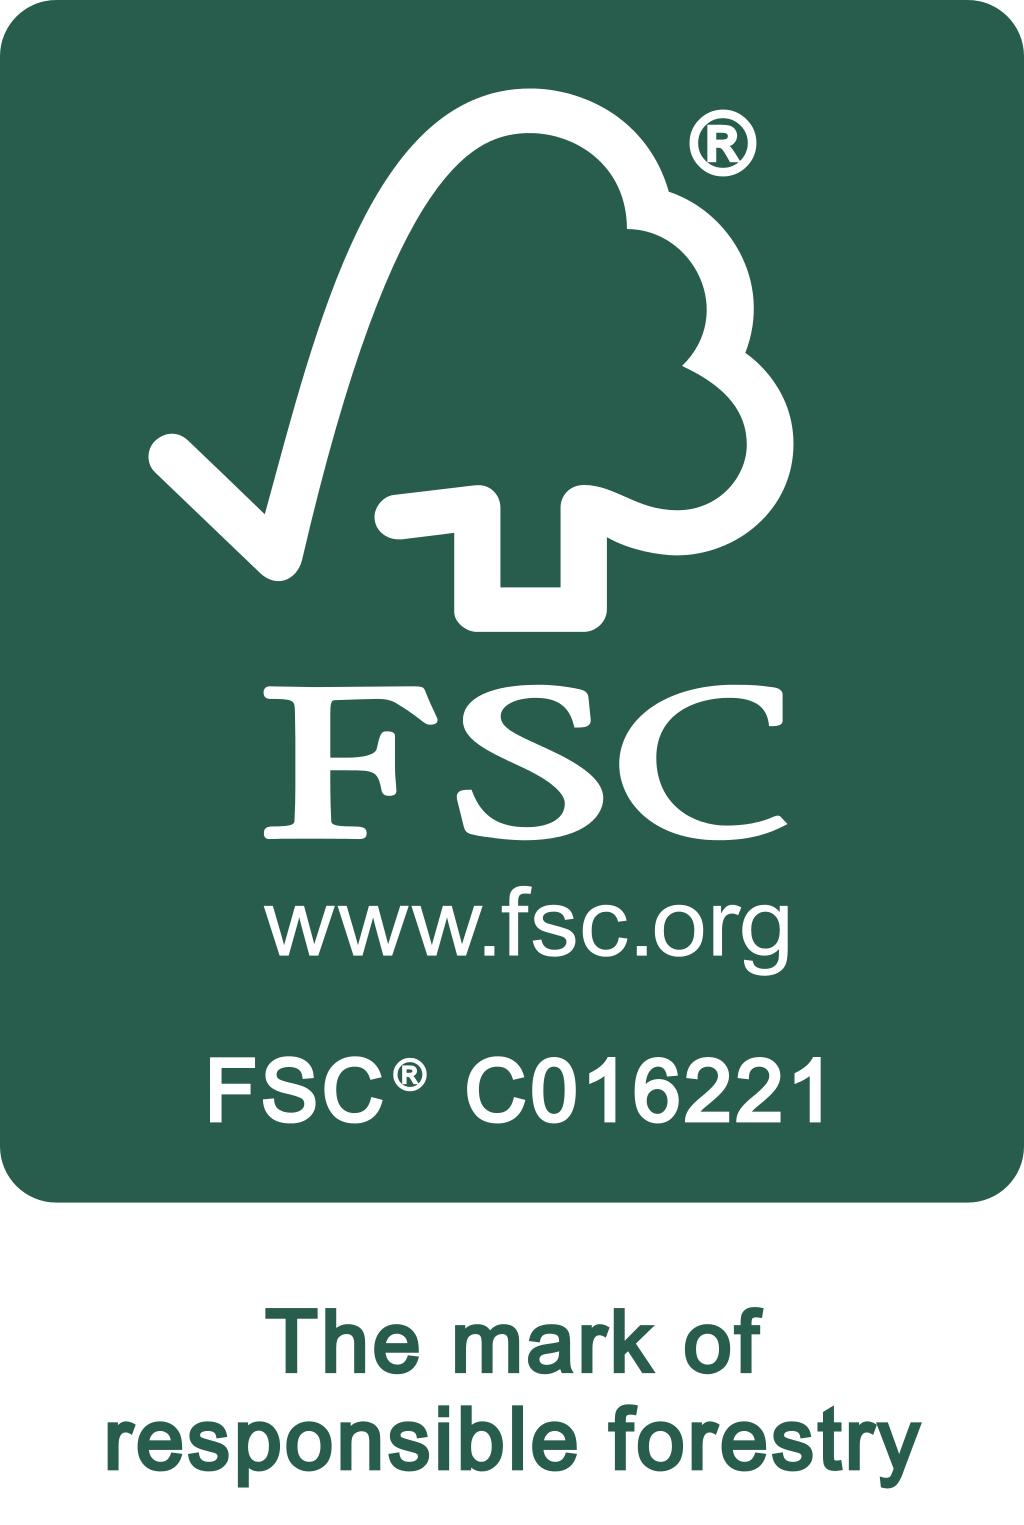 Falco-bank met FSC-gecertificeerd hout